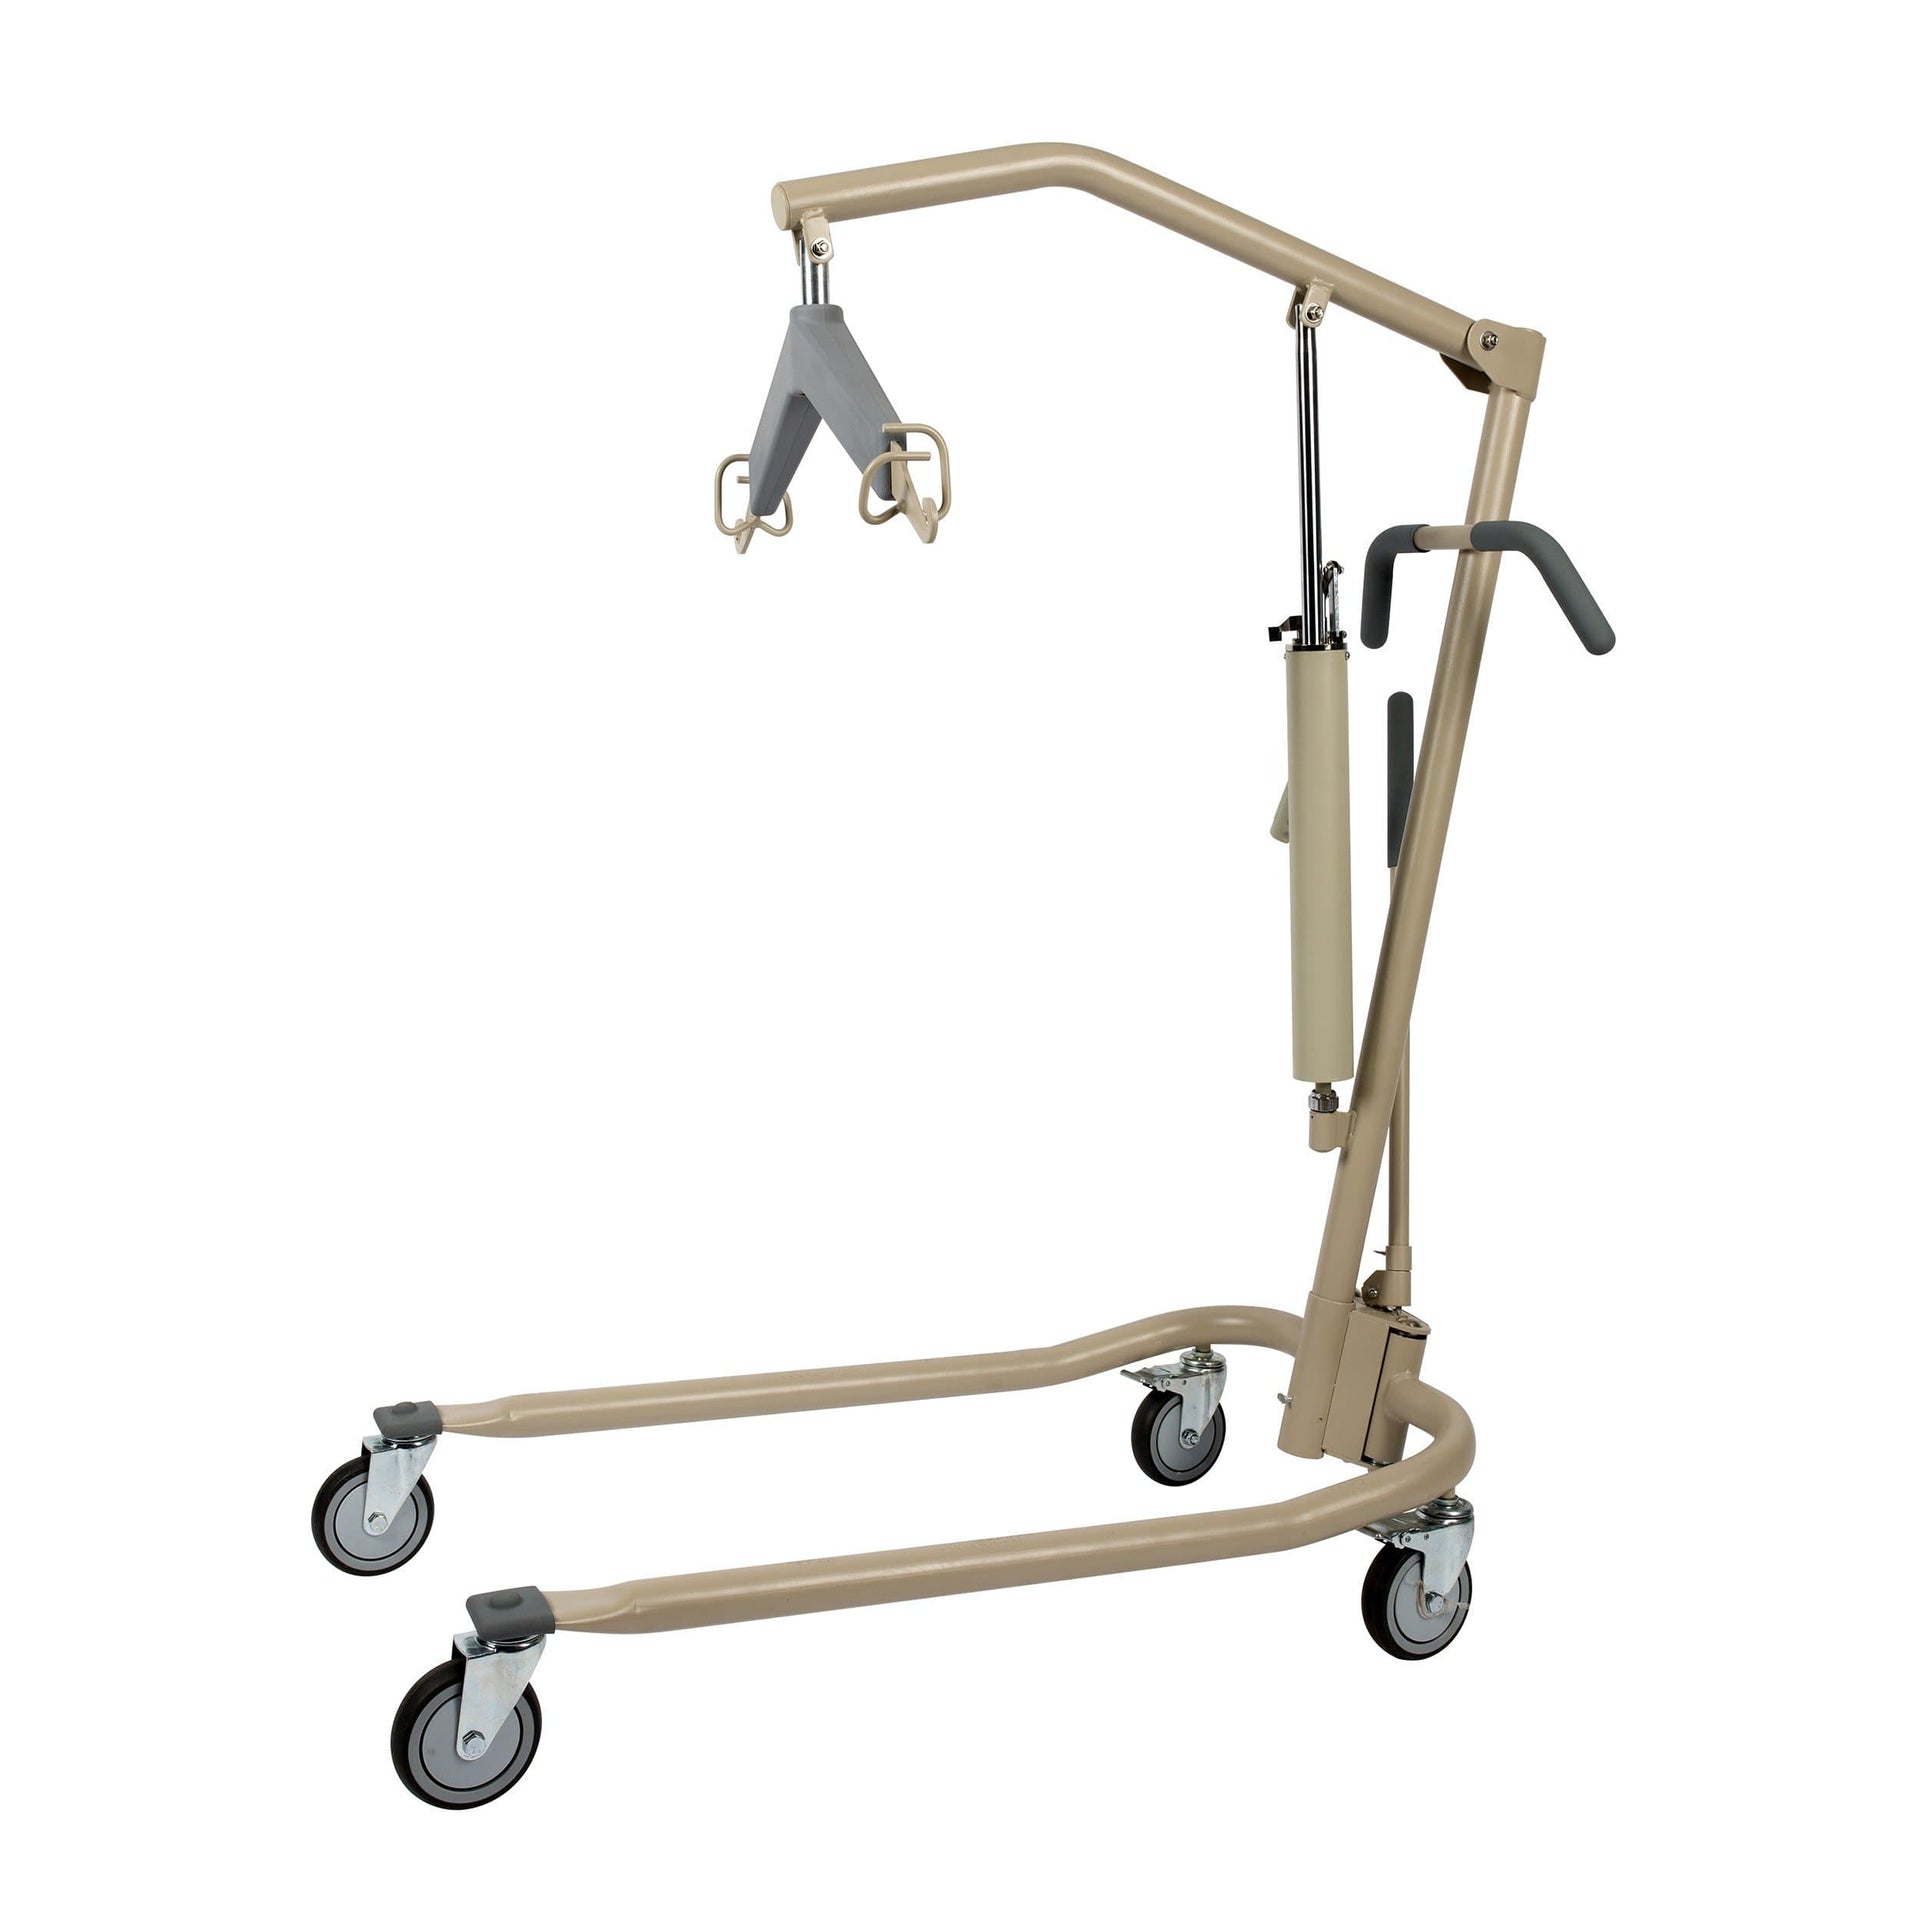 Dynarex Economy Hydraulic Patient Lift - 450 lb Capacity - Senior.com Patient Lifts